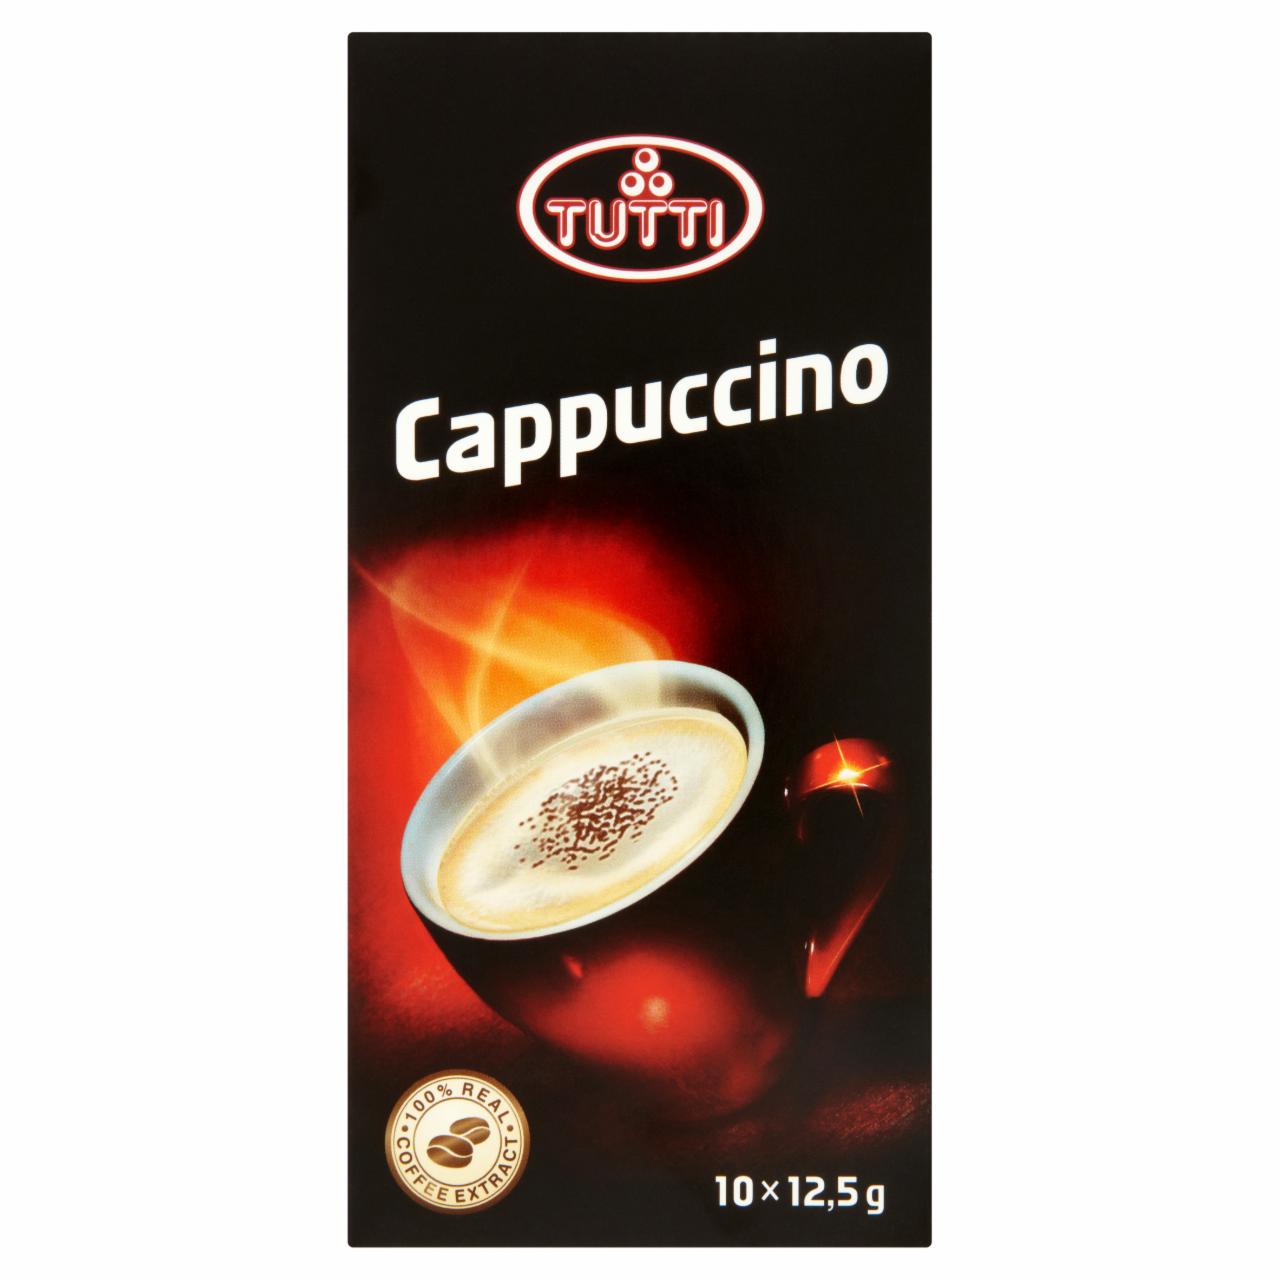 Képek - Tutti cappuccino kávéitalpor 10 x 12,5 g